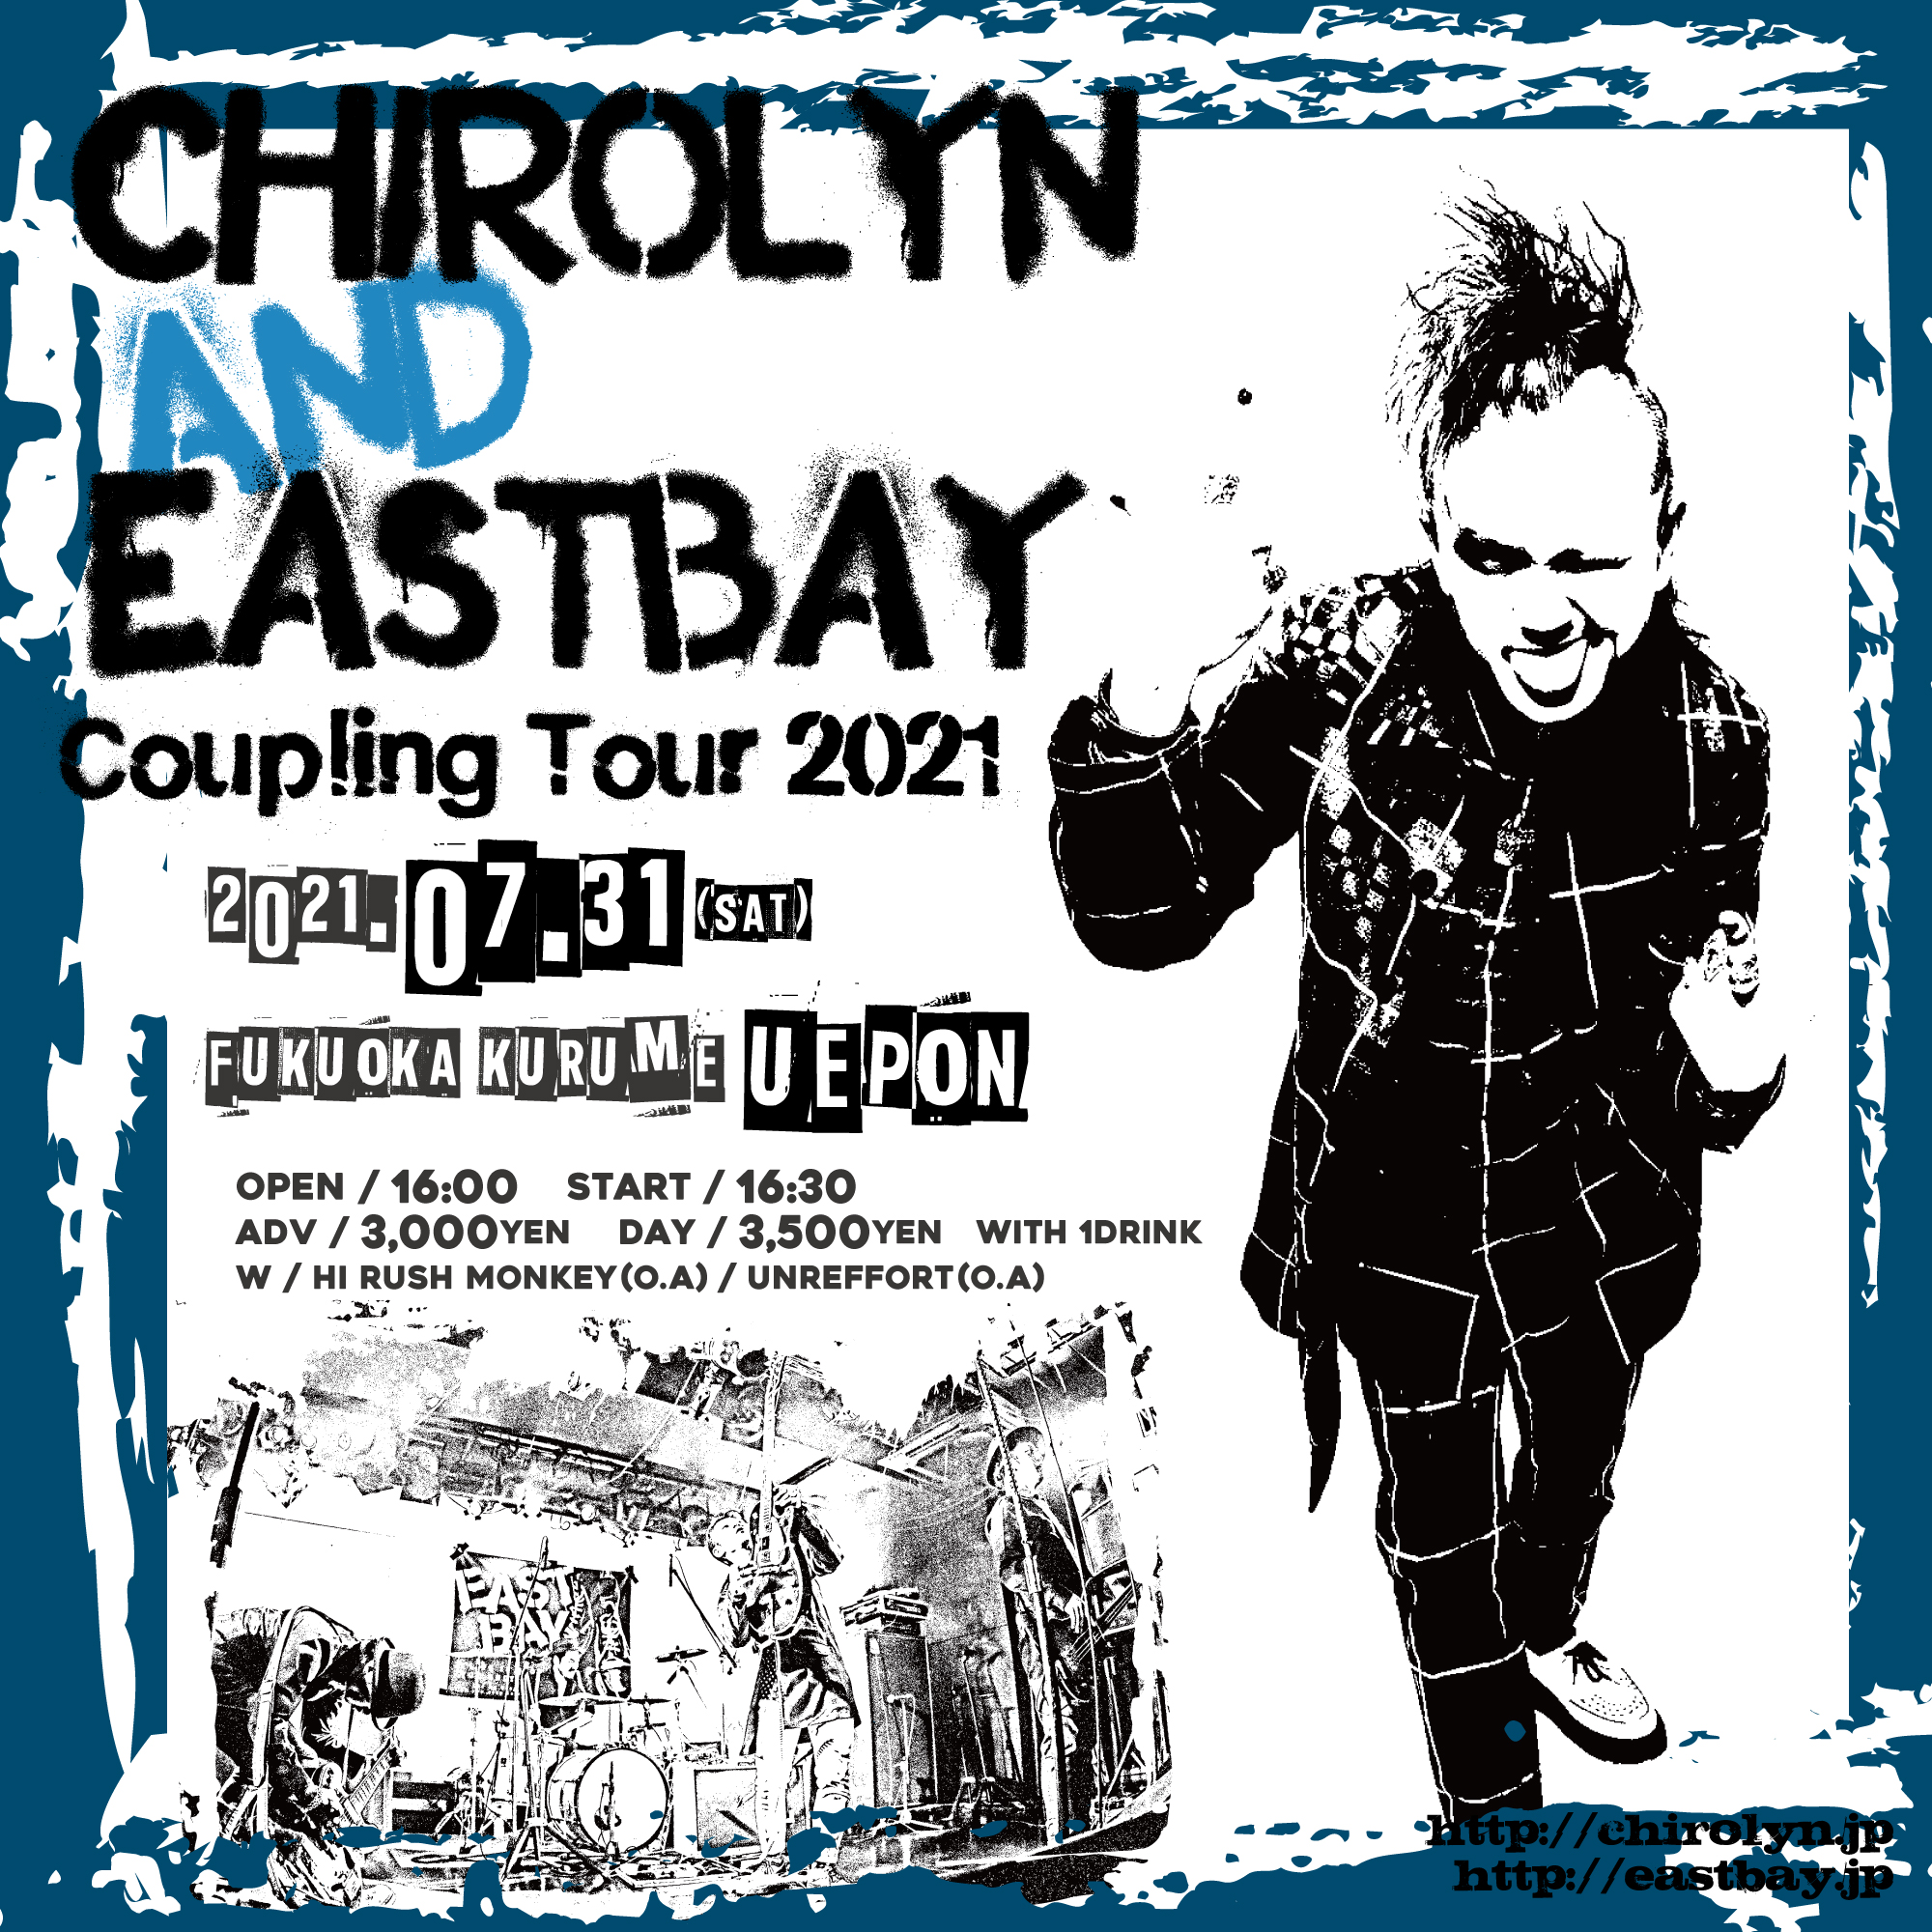 Chirolyn & EASTBAY Coupling Tour 2021 in 久留米の写真